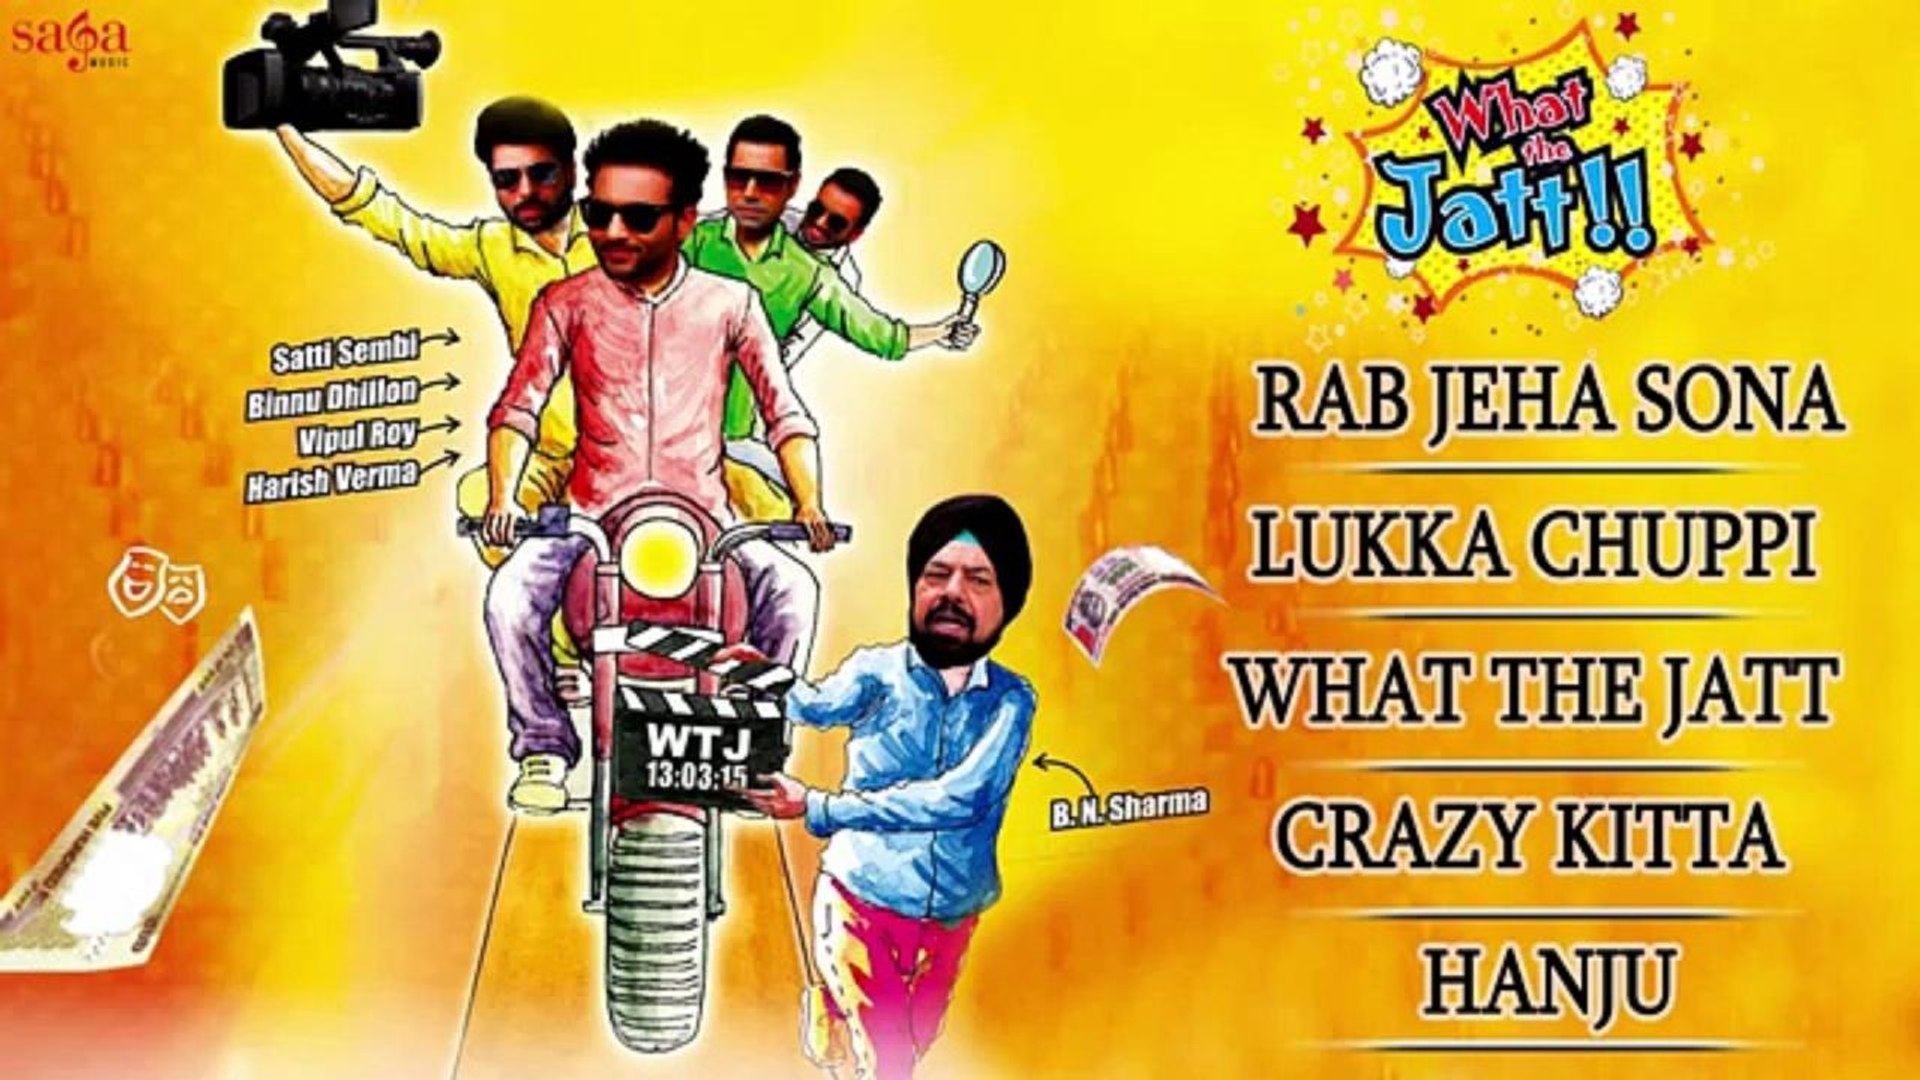 WHAT THE JATT 2015 Full Punjabi Movie Online HD - video Dailymotion